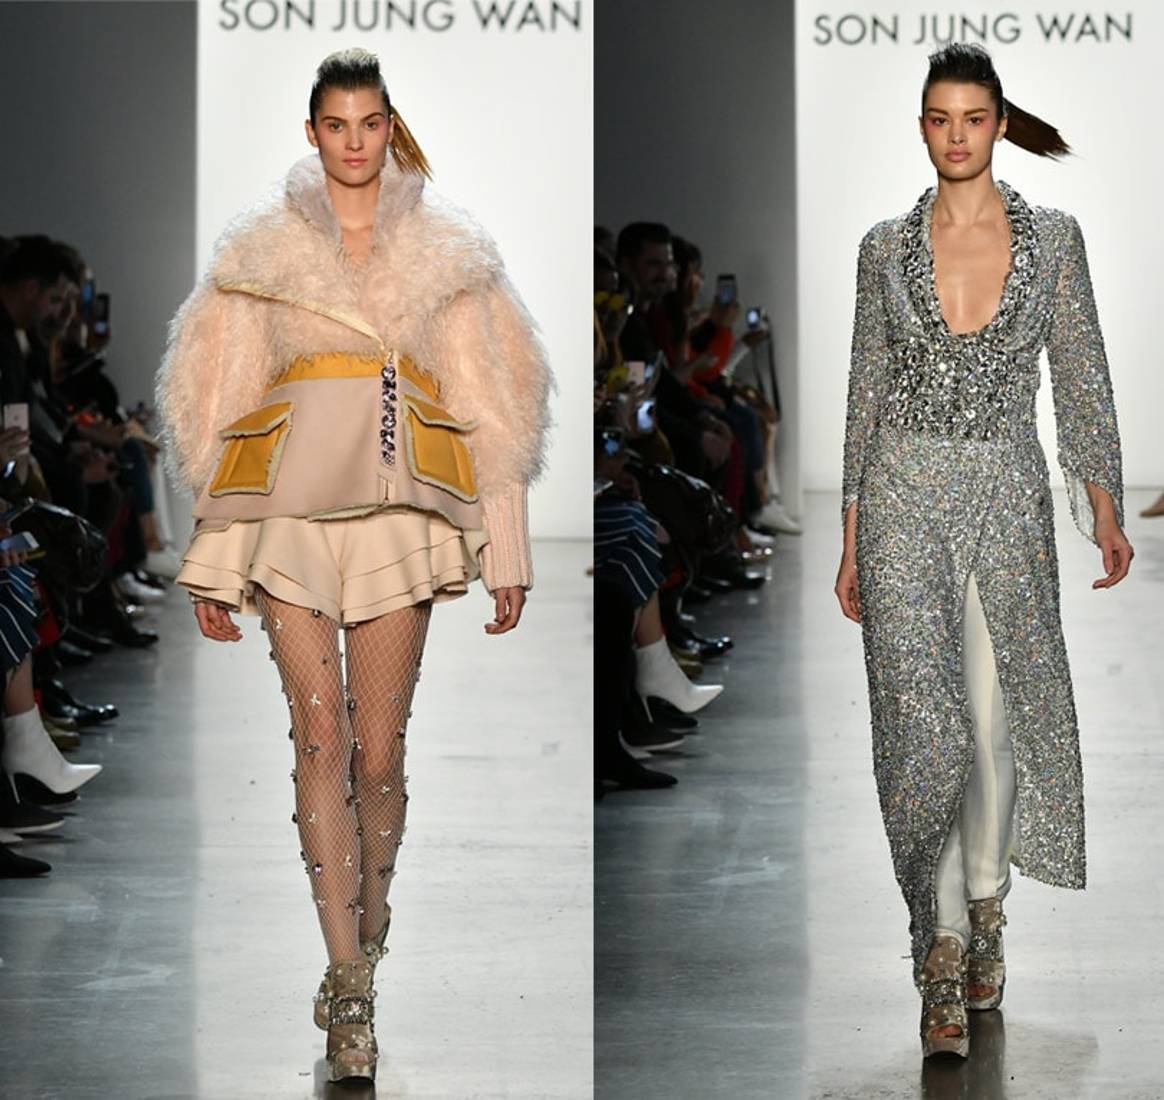 Son Jung Wan keeps it maximalist for New York Fashion Week